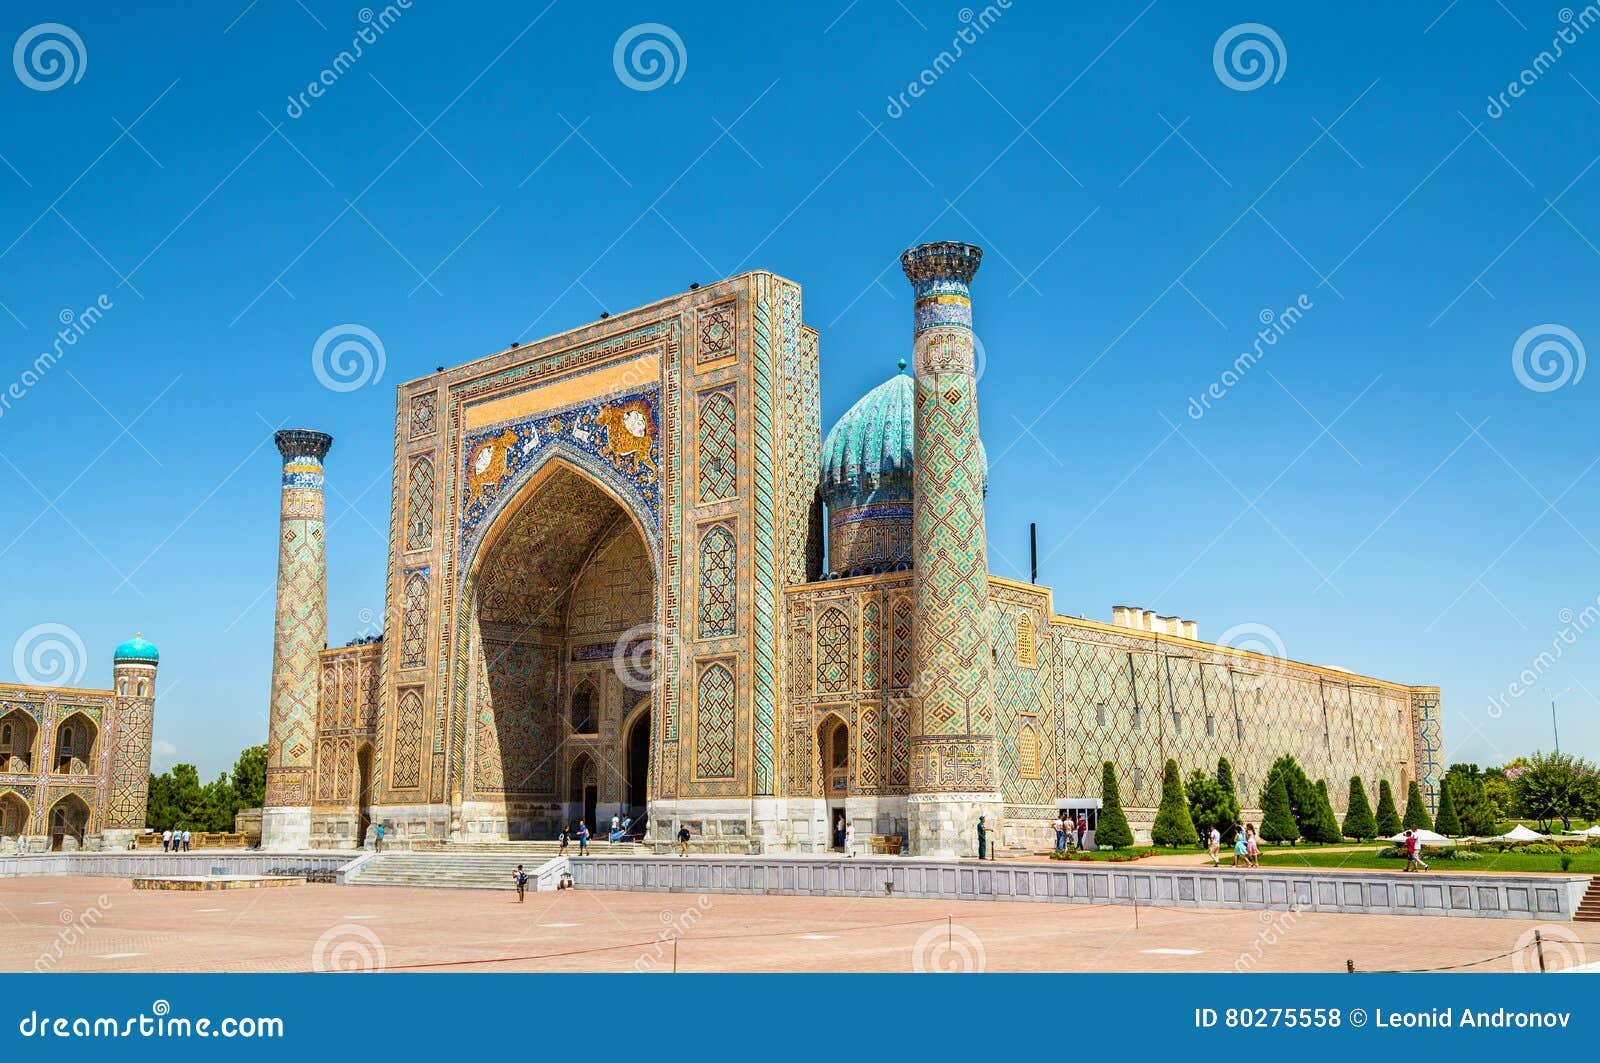 sher dor madrasah on registan square in samarkand, uzbekistan